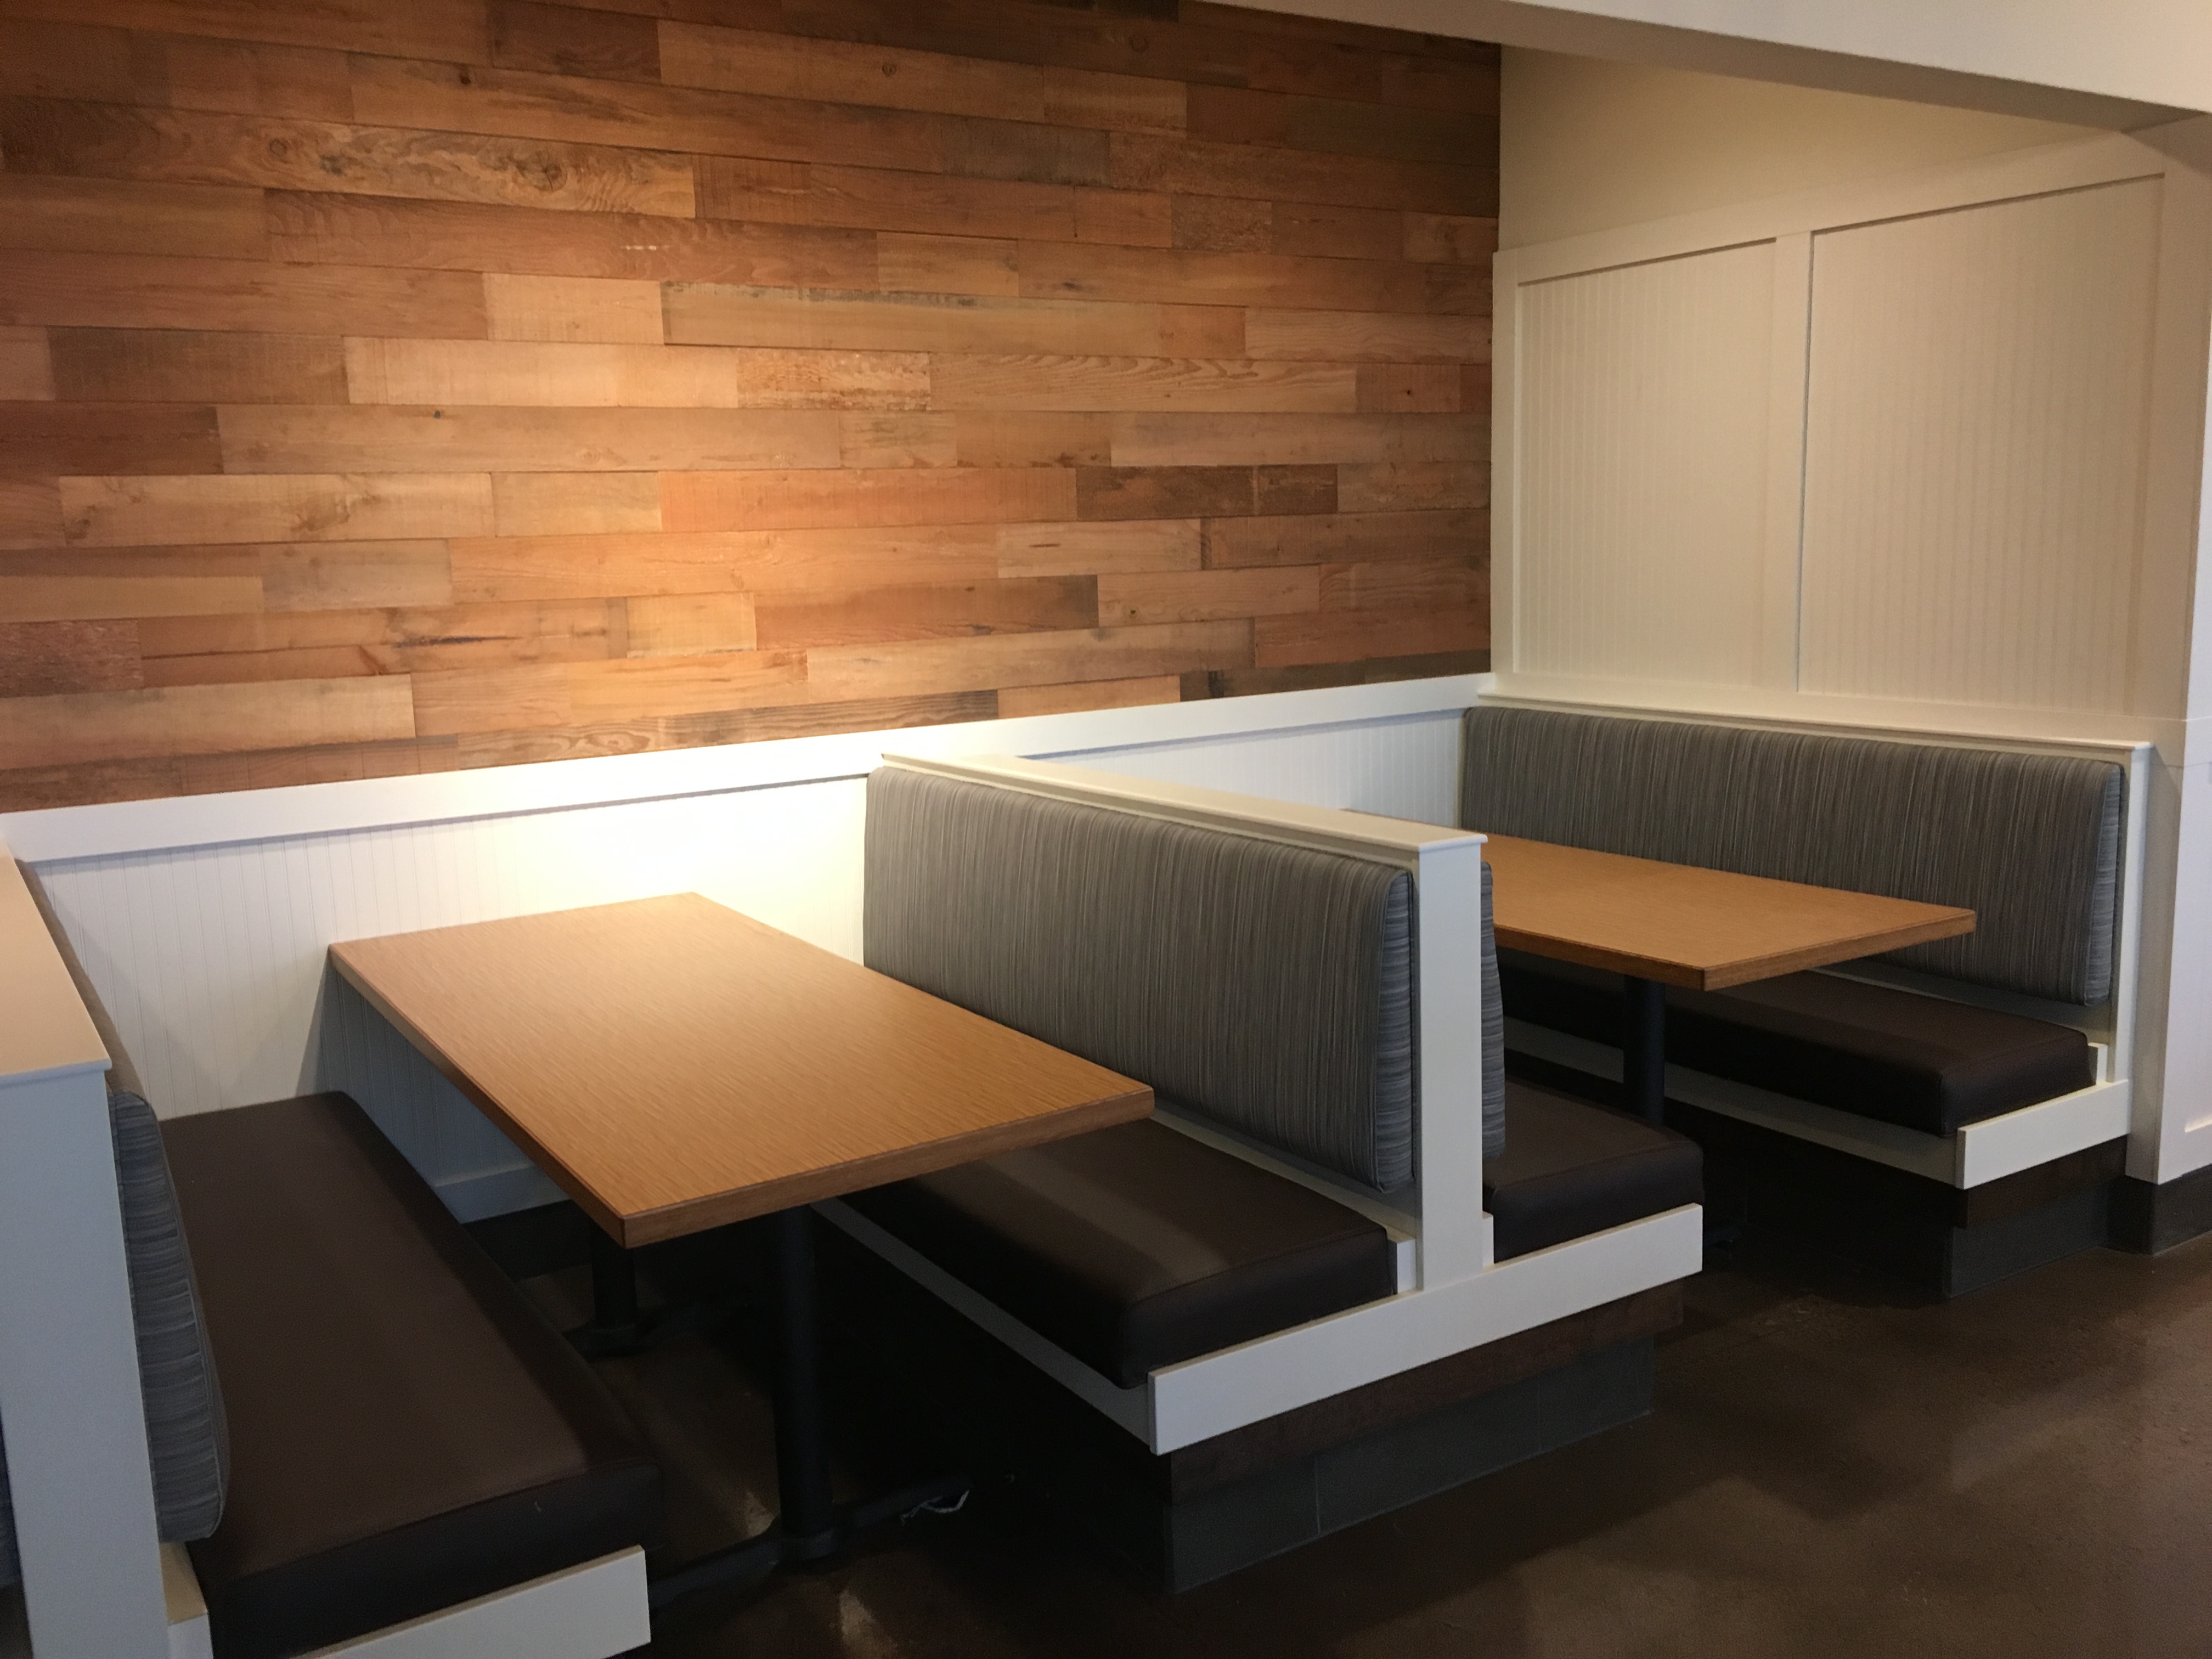 New Reupholstery Restaurant Booths